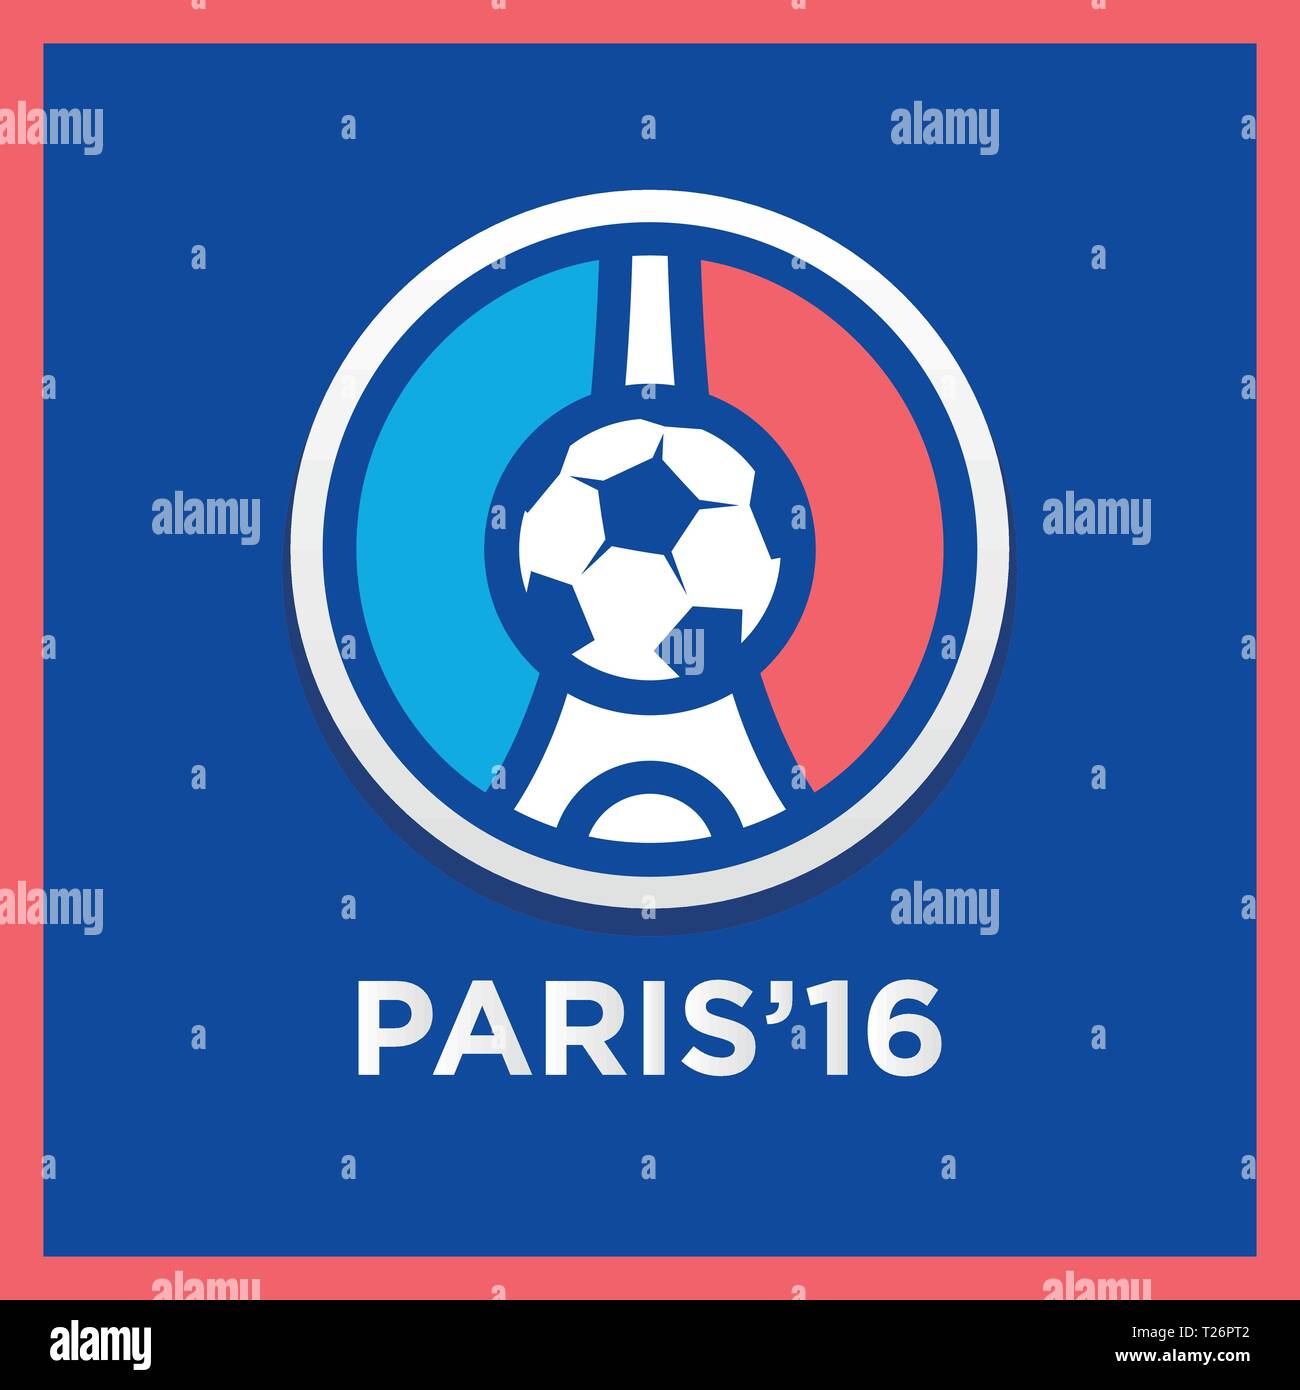 Football Or Soccer France Euro 16 Logos Eiffel Tower Logo Paris Icon Design Vector Illustration Stock Vector Image Art Alamy